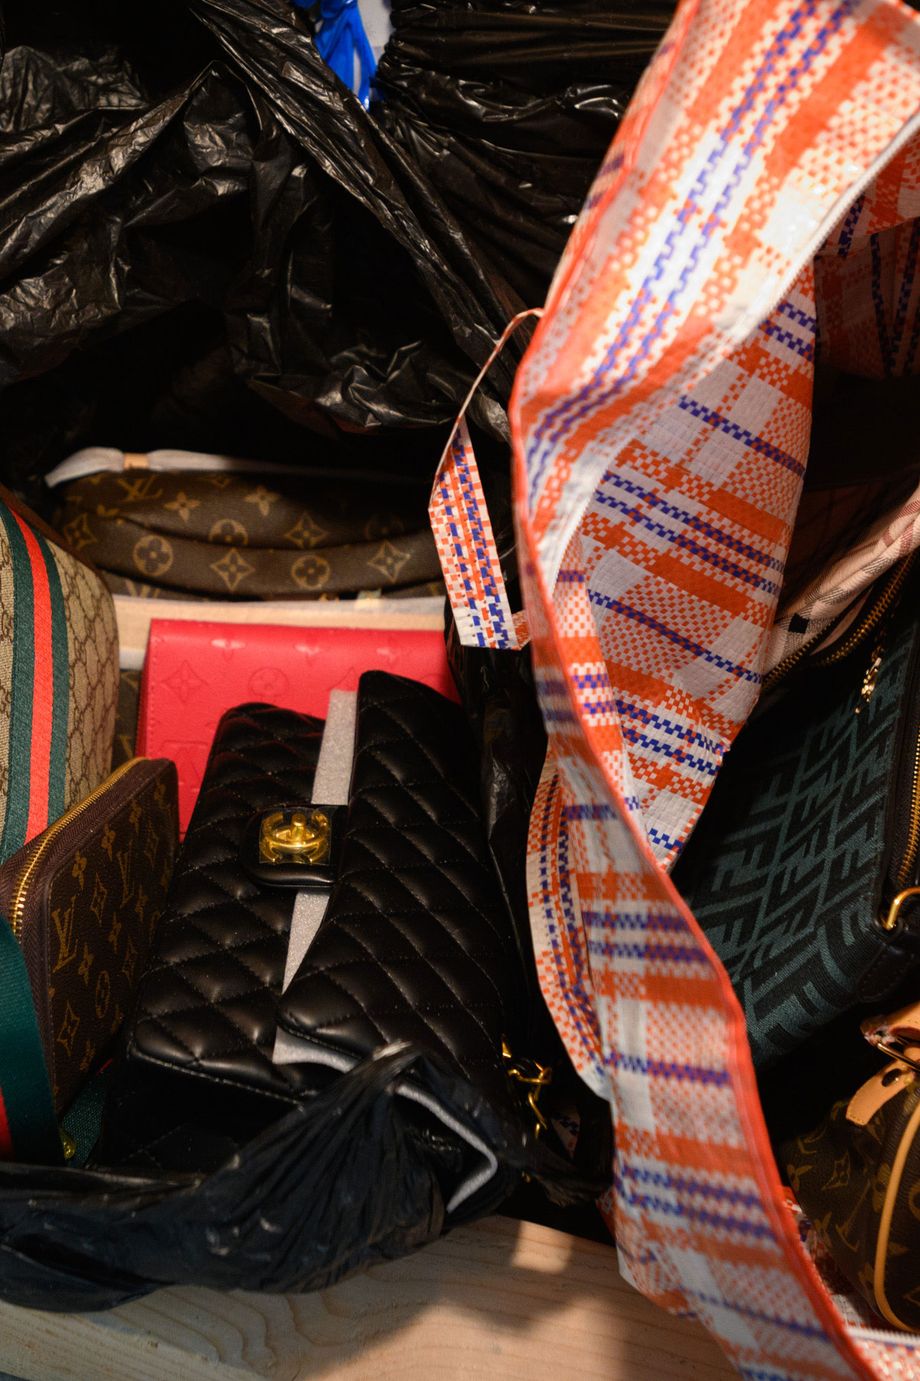 New York considers crackdown on counterfeit luxury